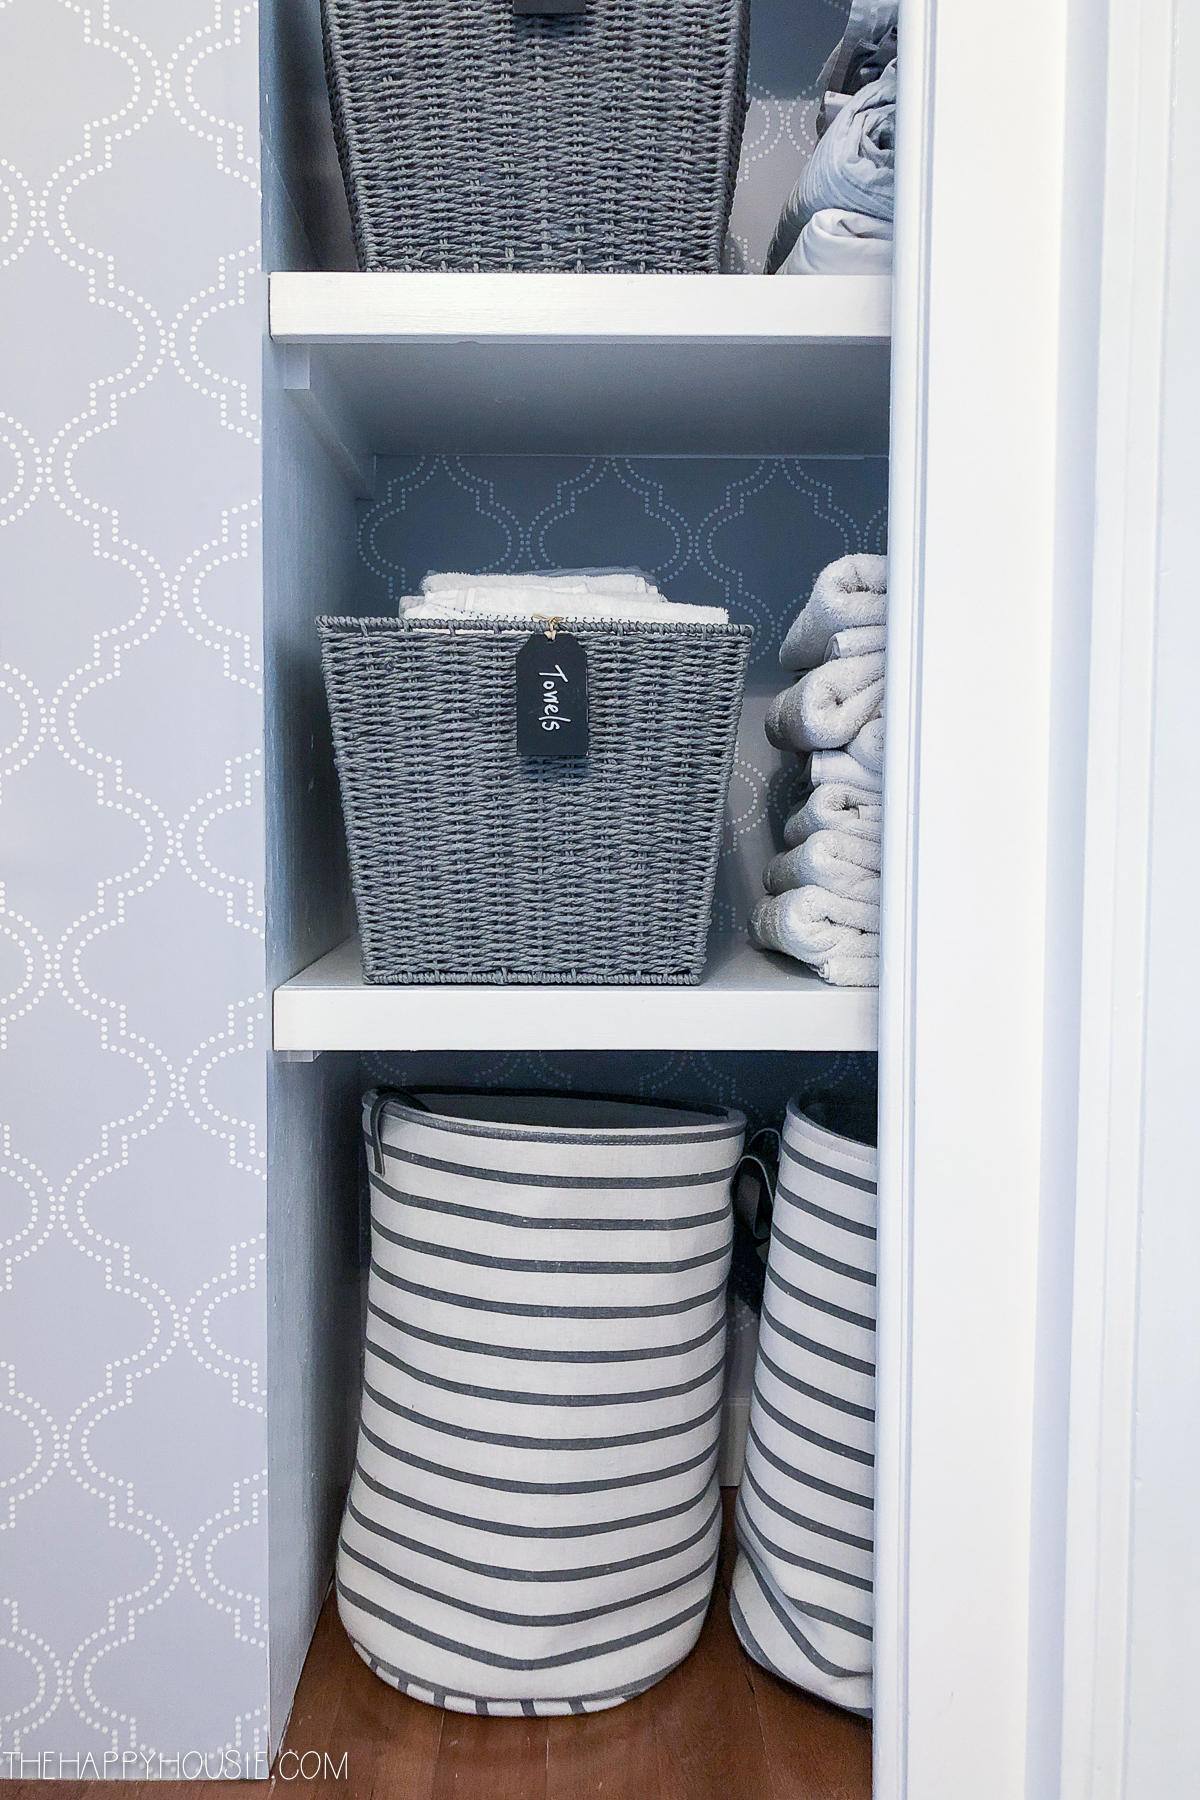 Striped baskets on the bottom of the linen shelf.